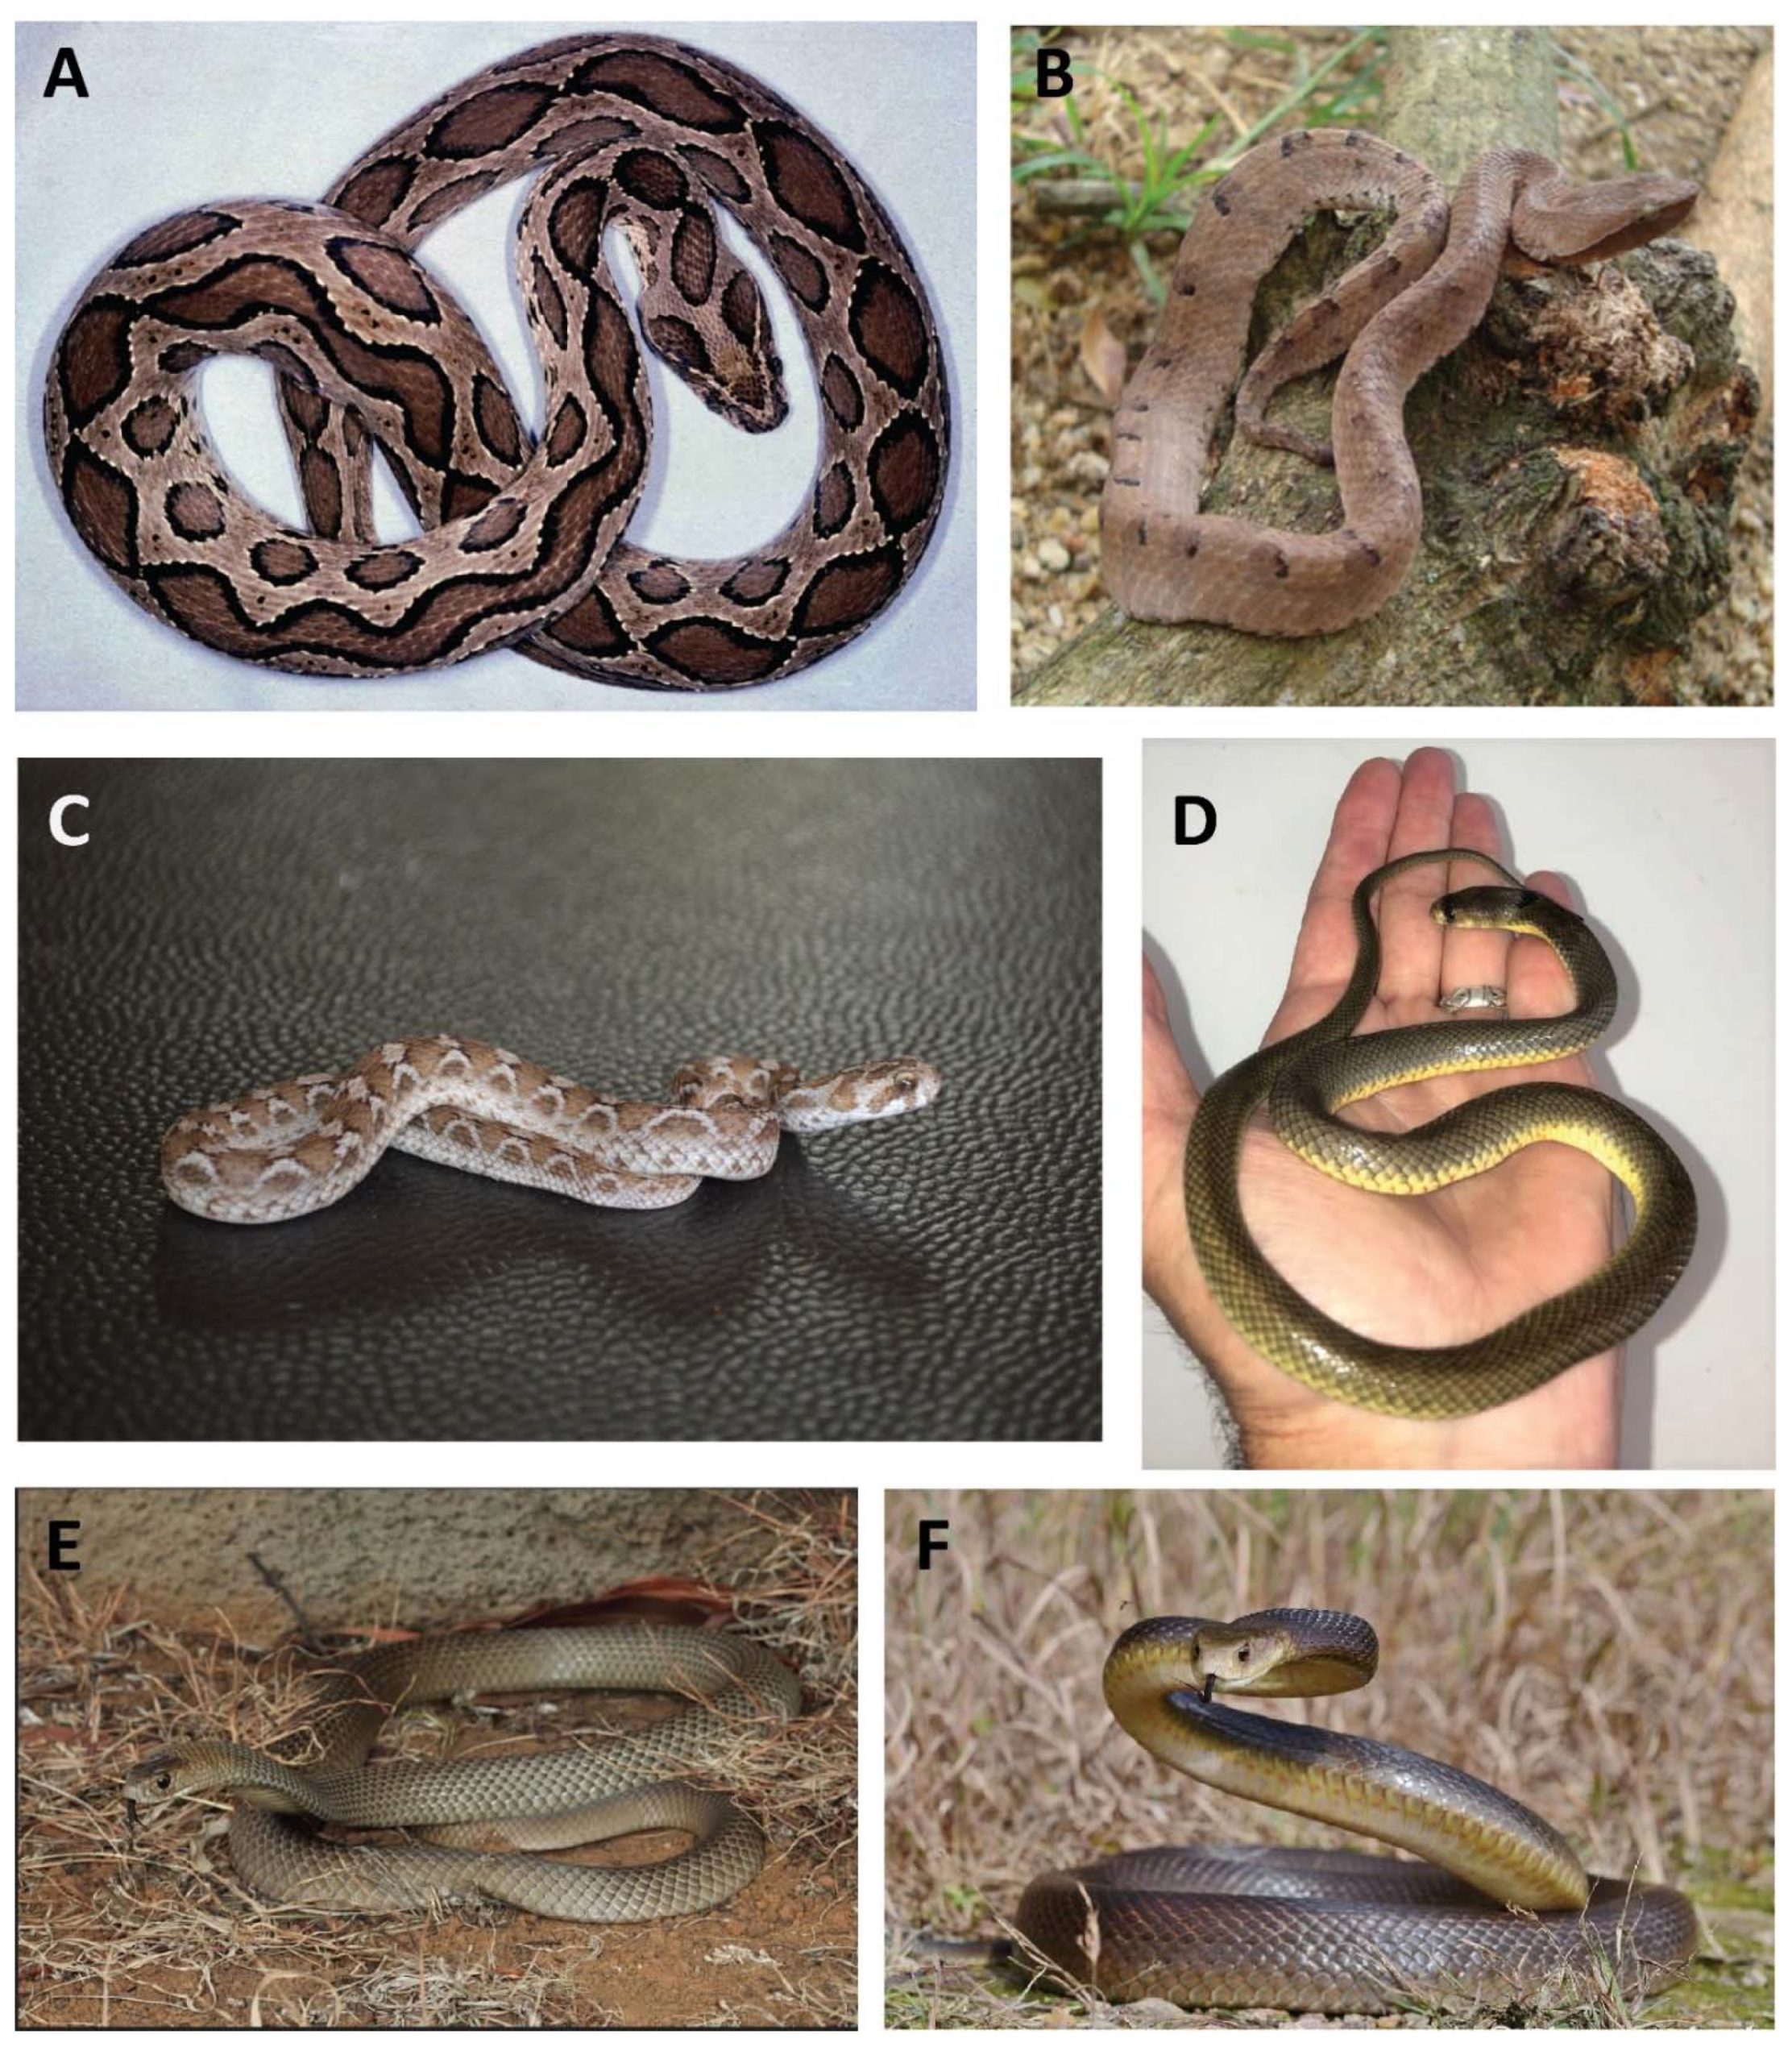 Types Of Snake Bites